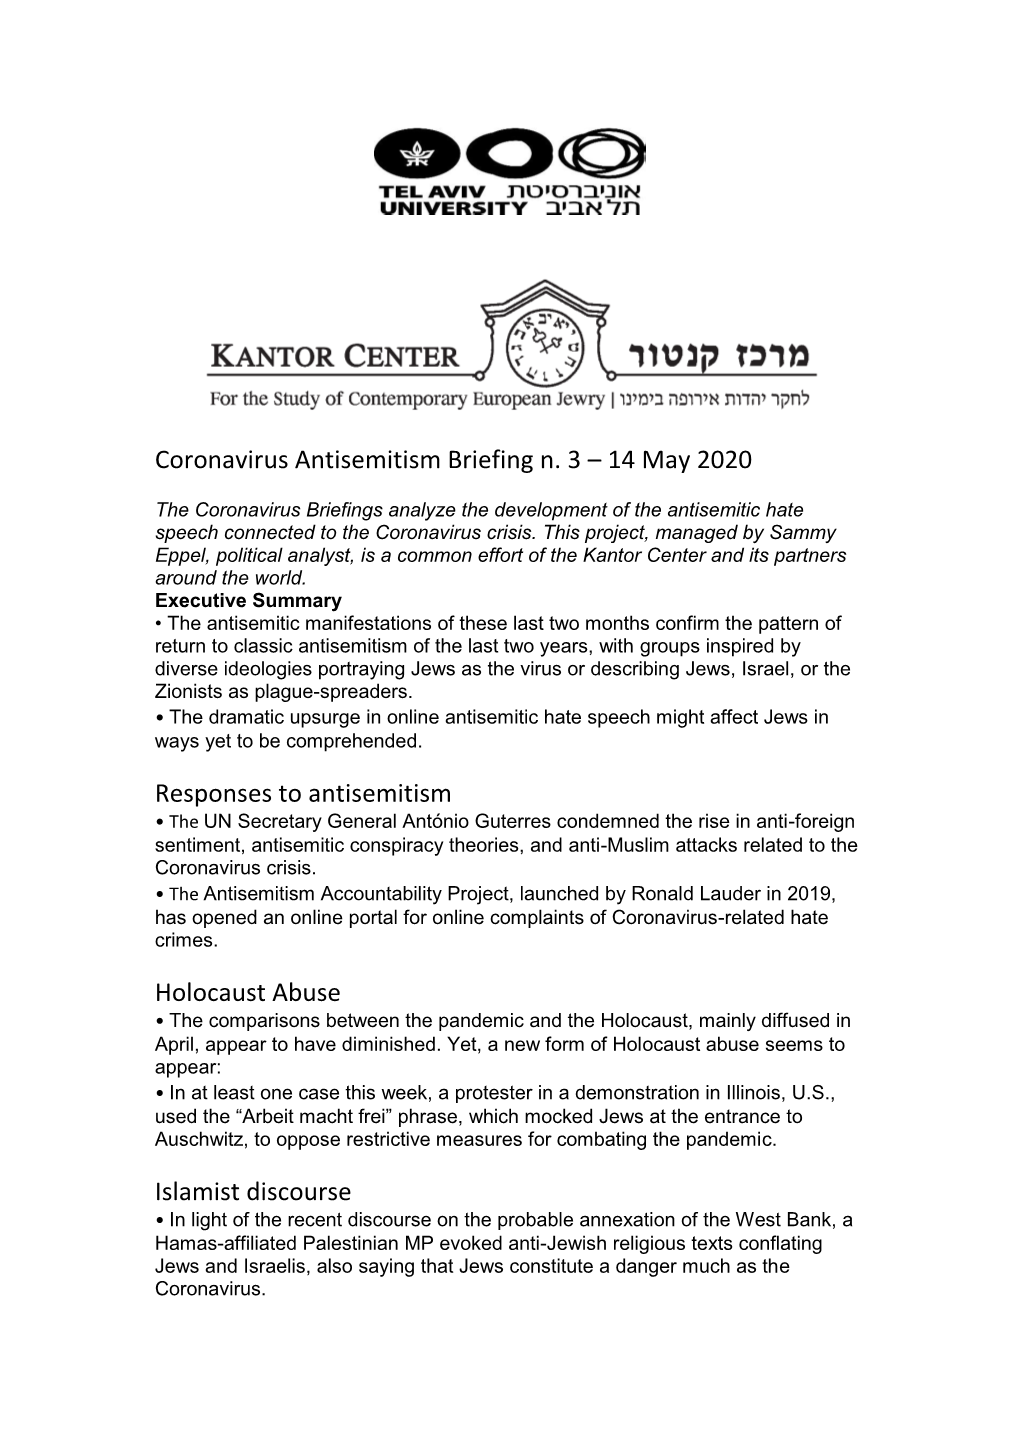 Coronavirus Antisemitism Briefing N. 3- 14 May 2020